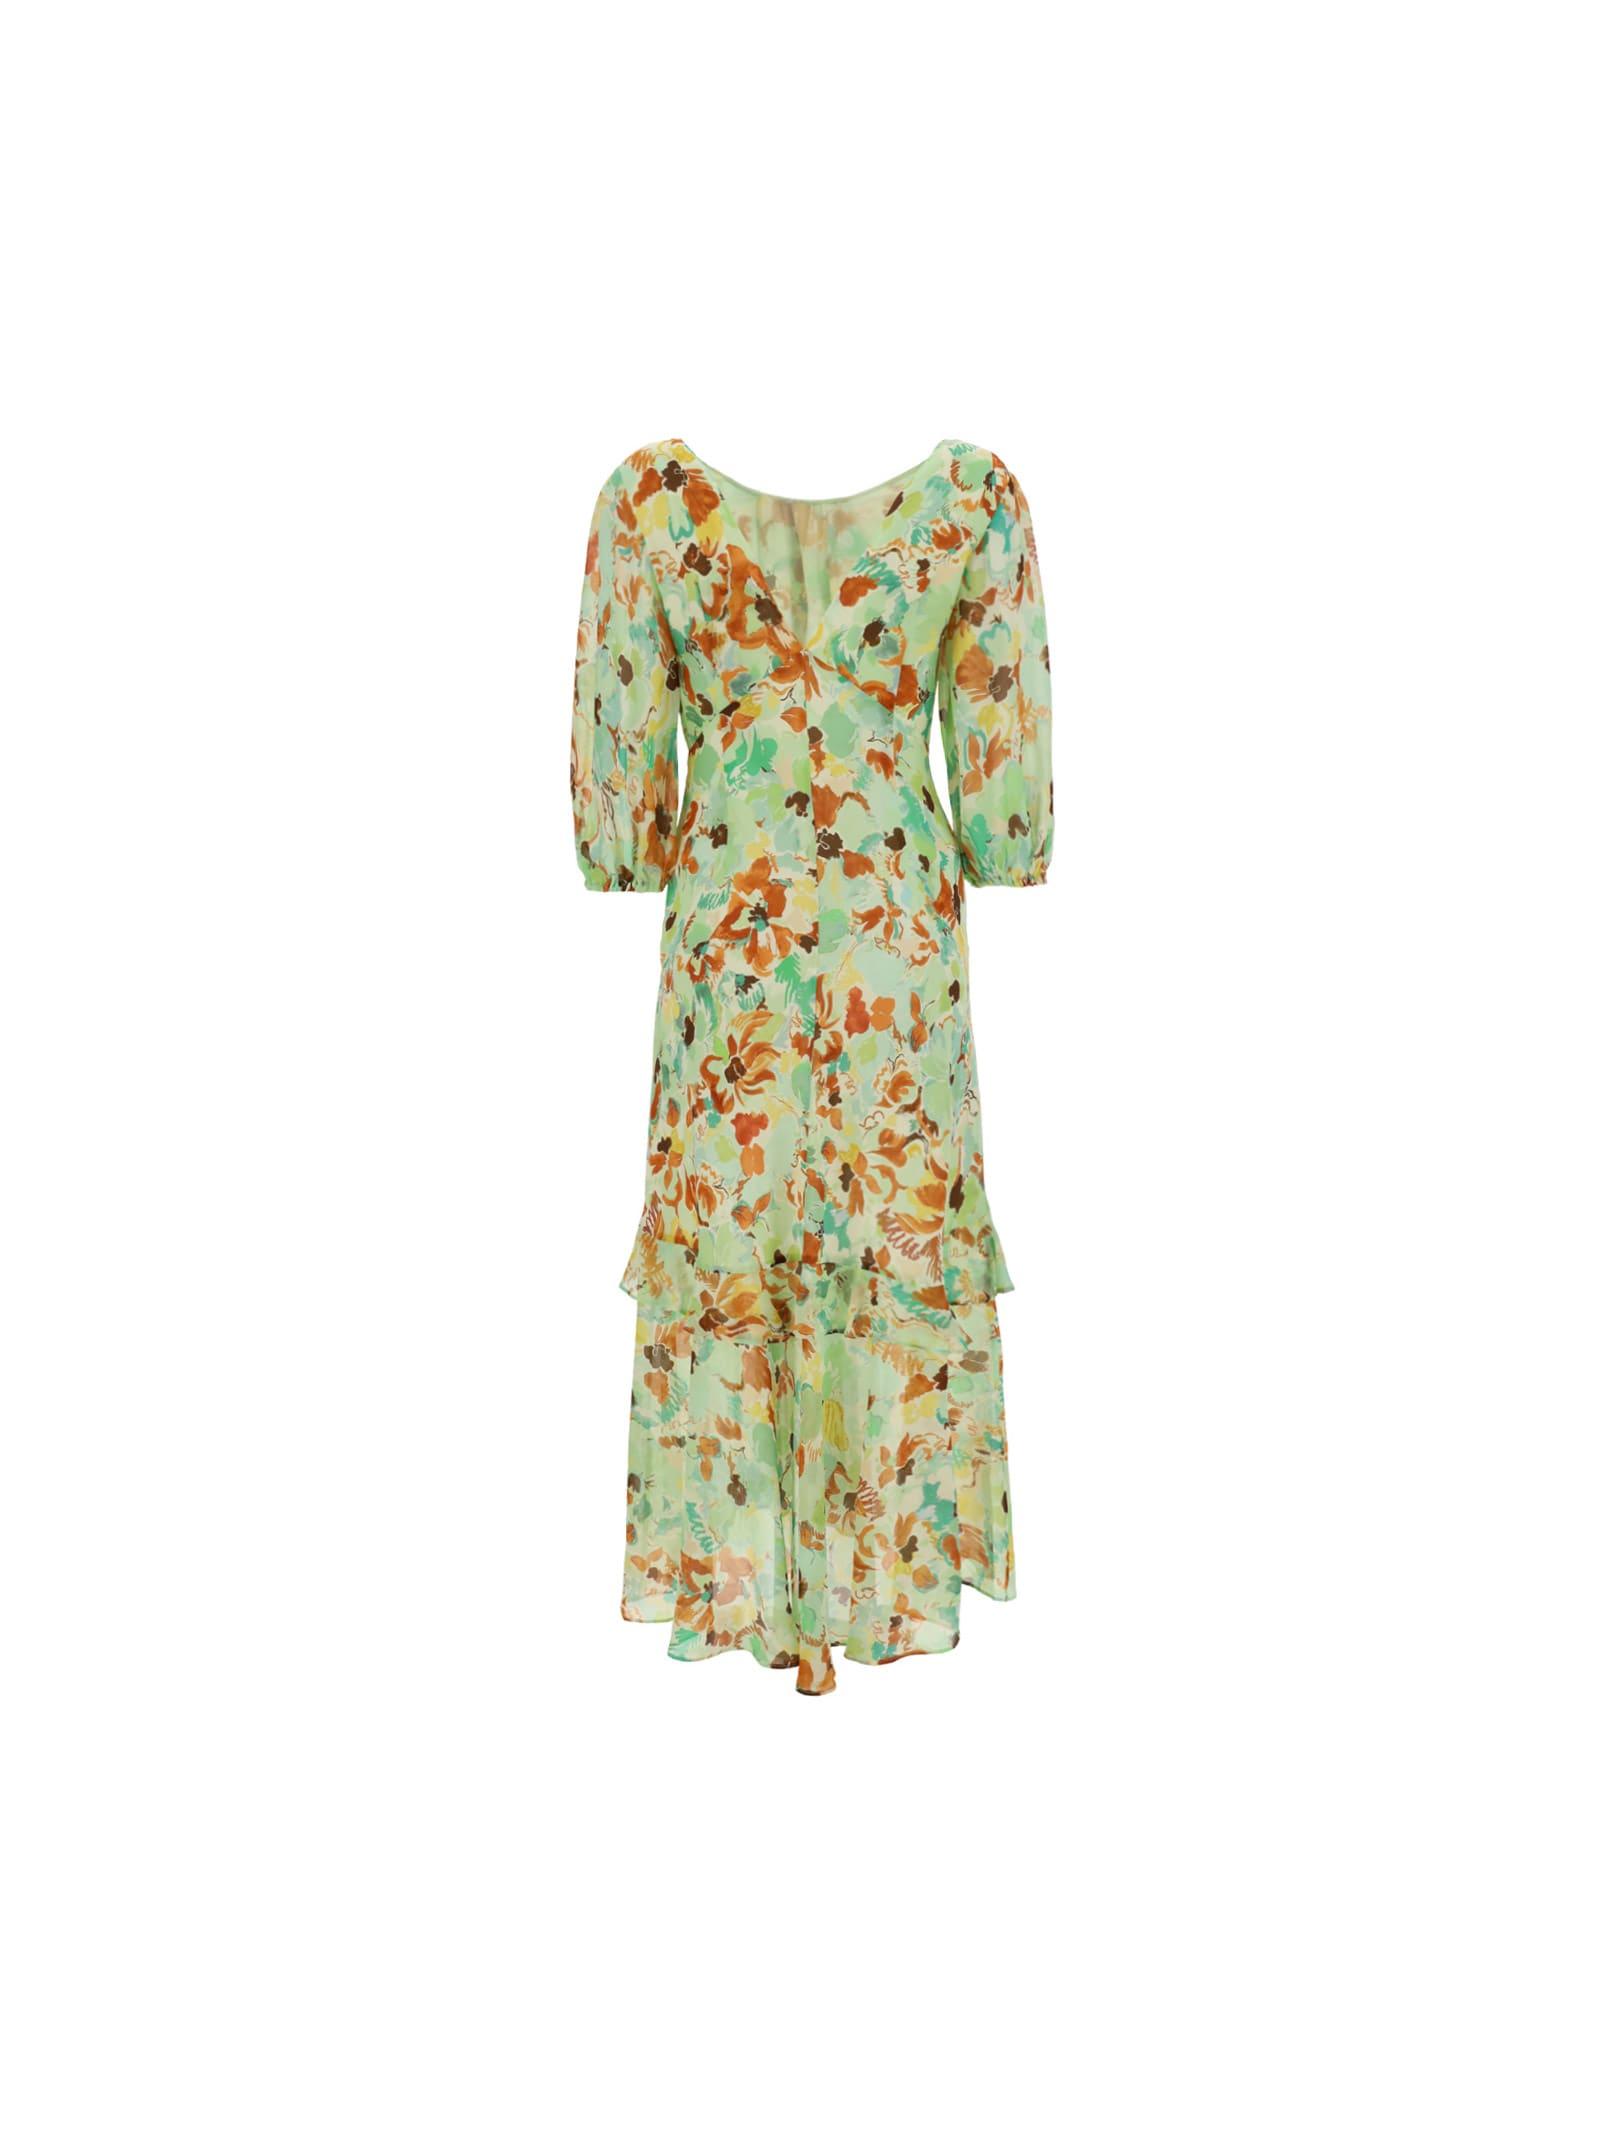 RIXO London Silk Cheryl Dress in Camo Floral (Green) | Lyst